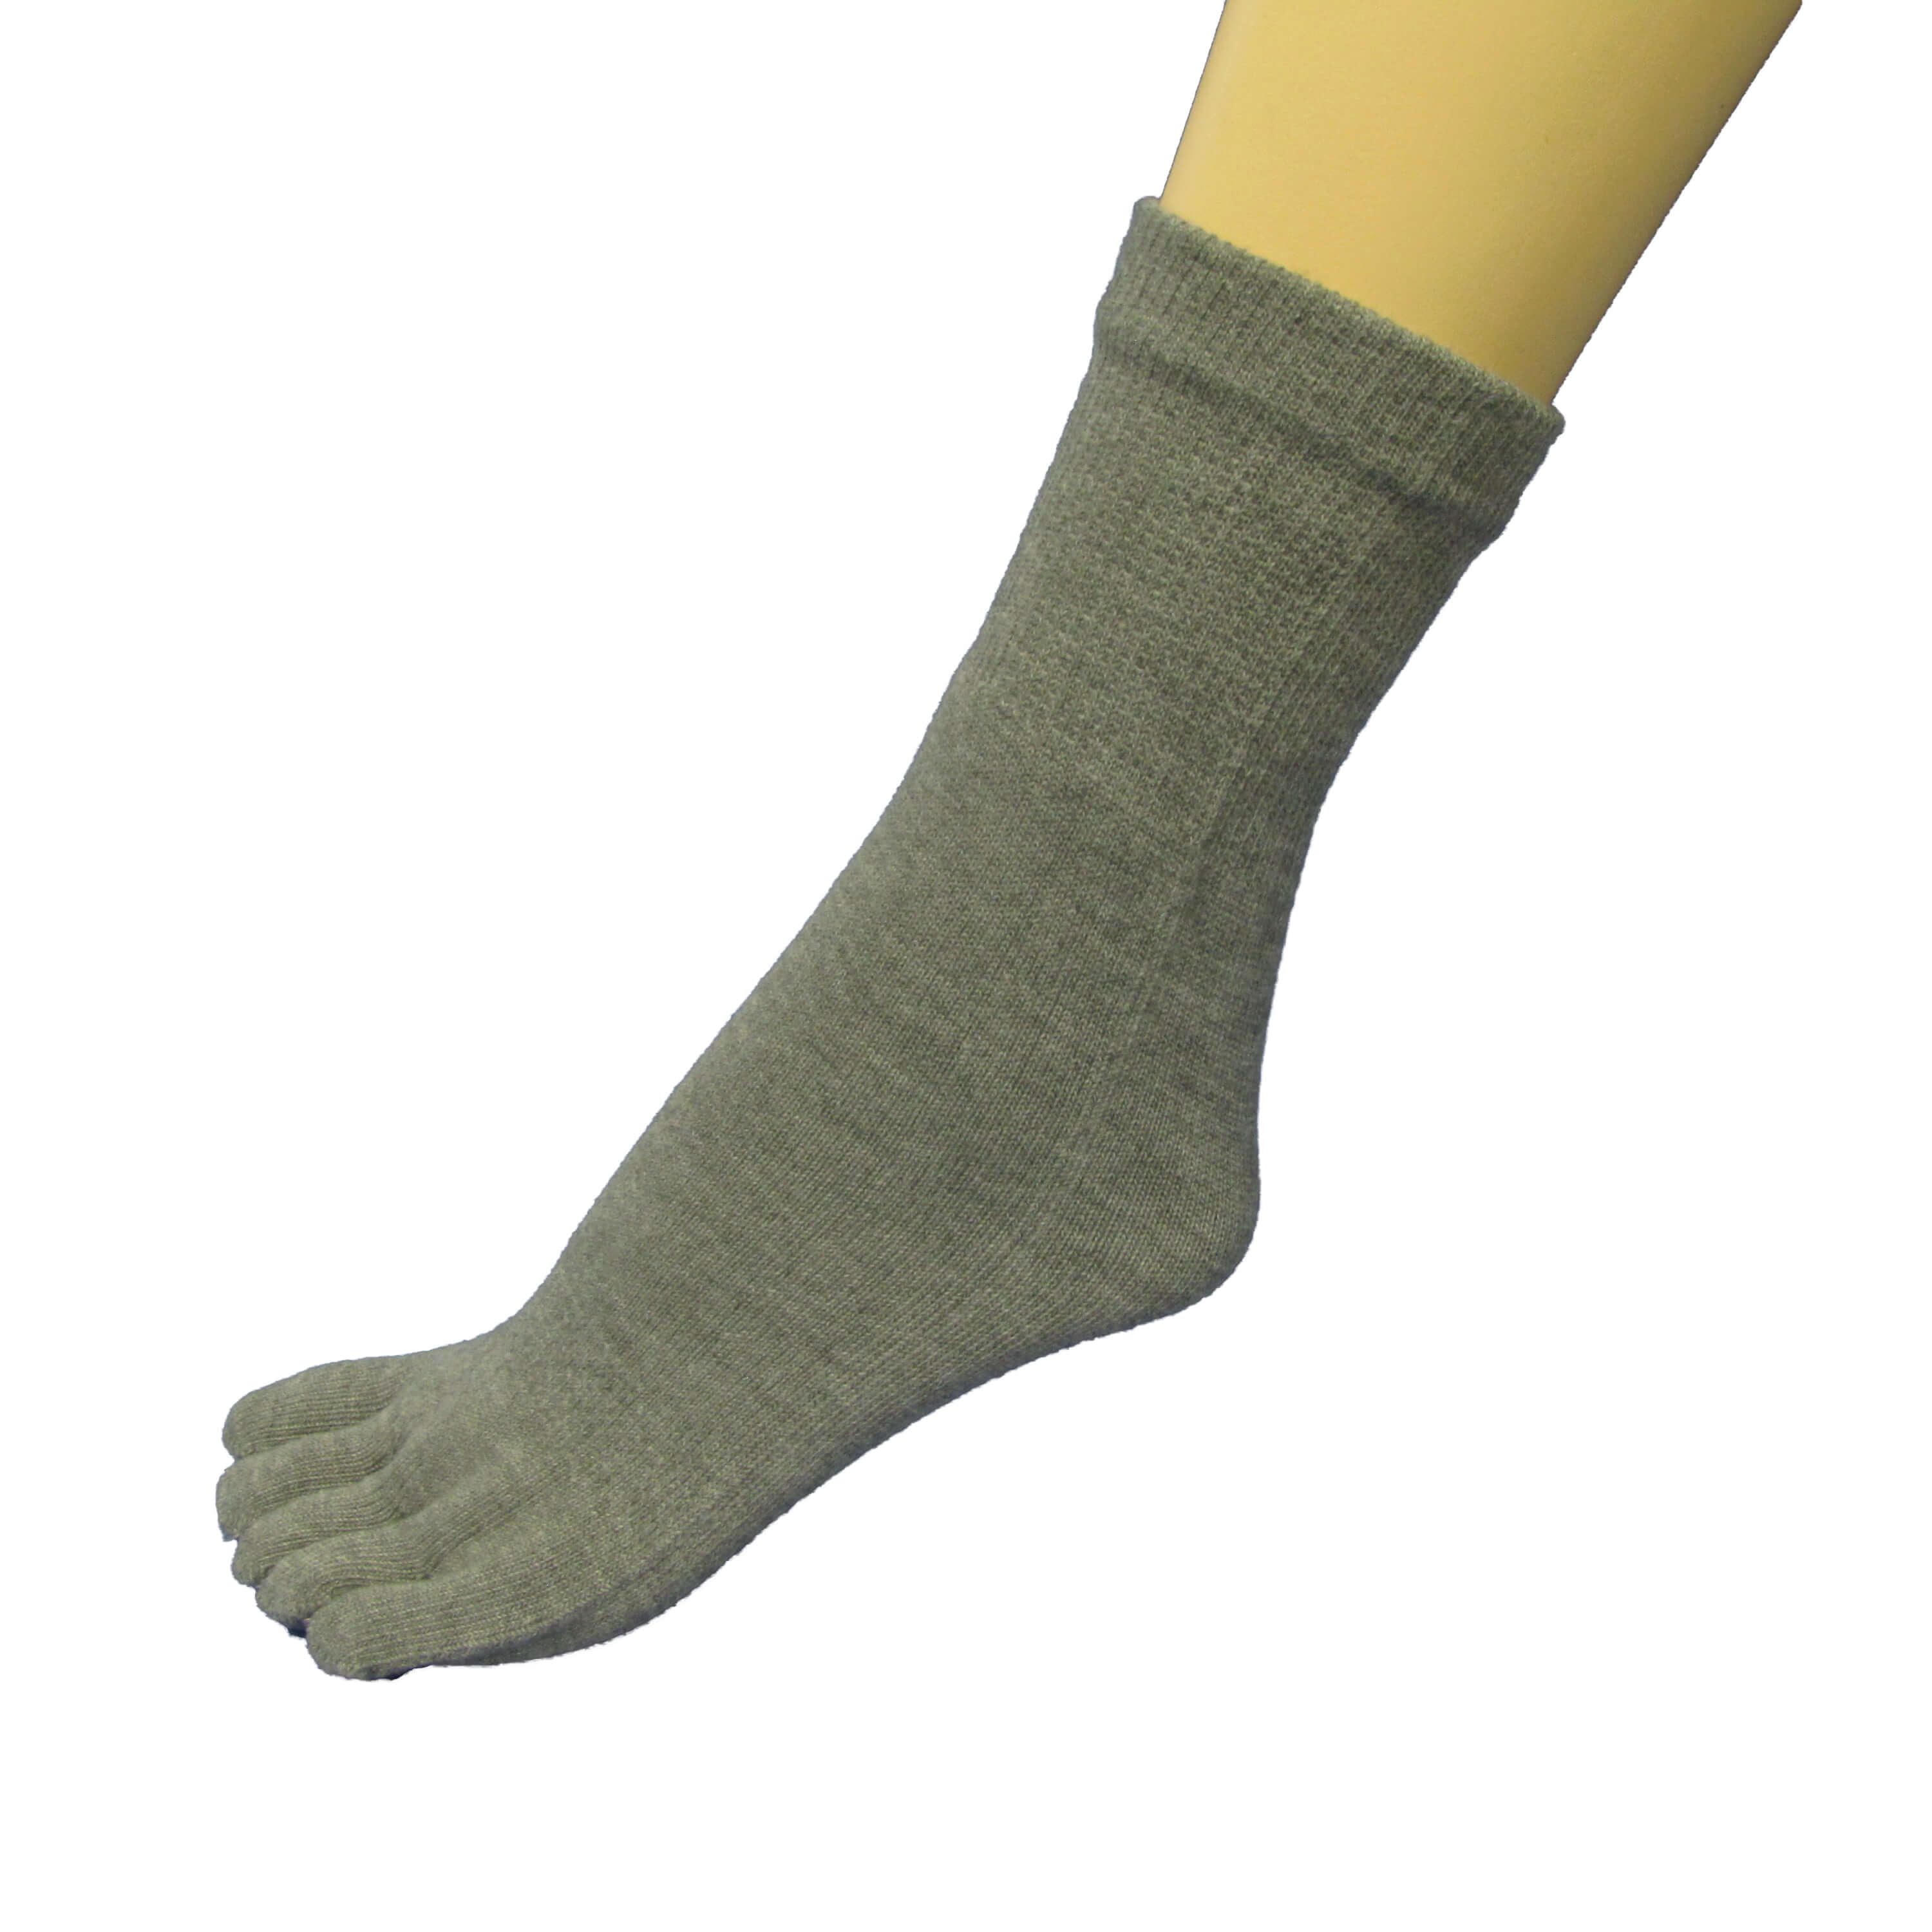 Couver Cotton Quarter Winter Thick 5 Fingers Toe socks, Gray Medium ...